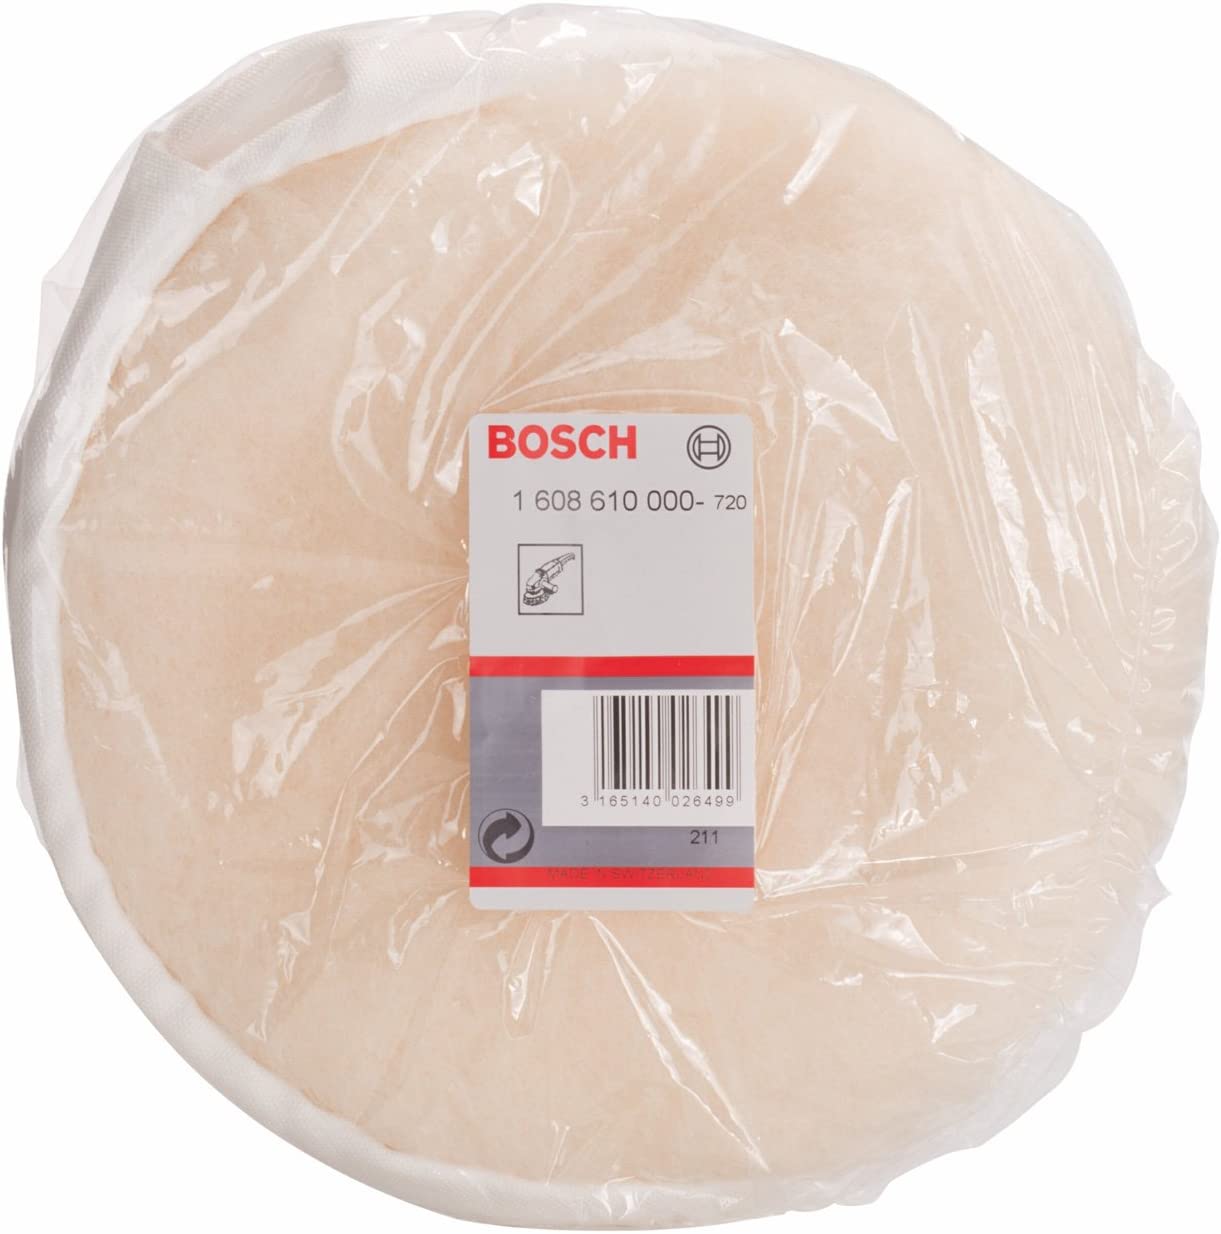 Bosch 1608610000 Polishing Lambswool Bonnett